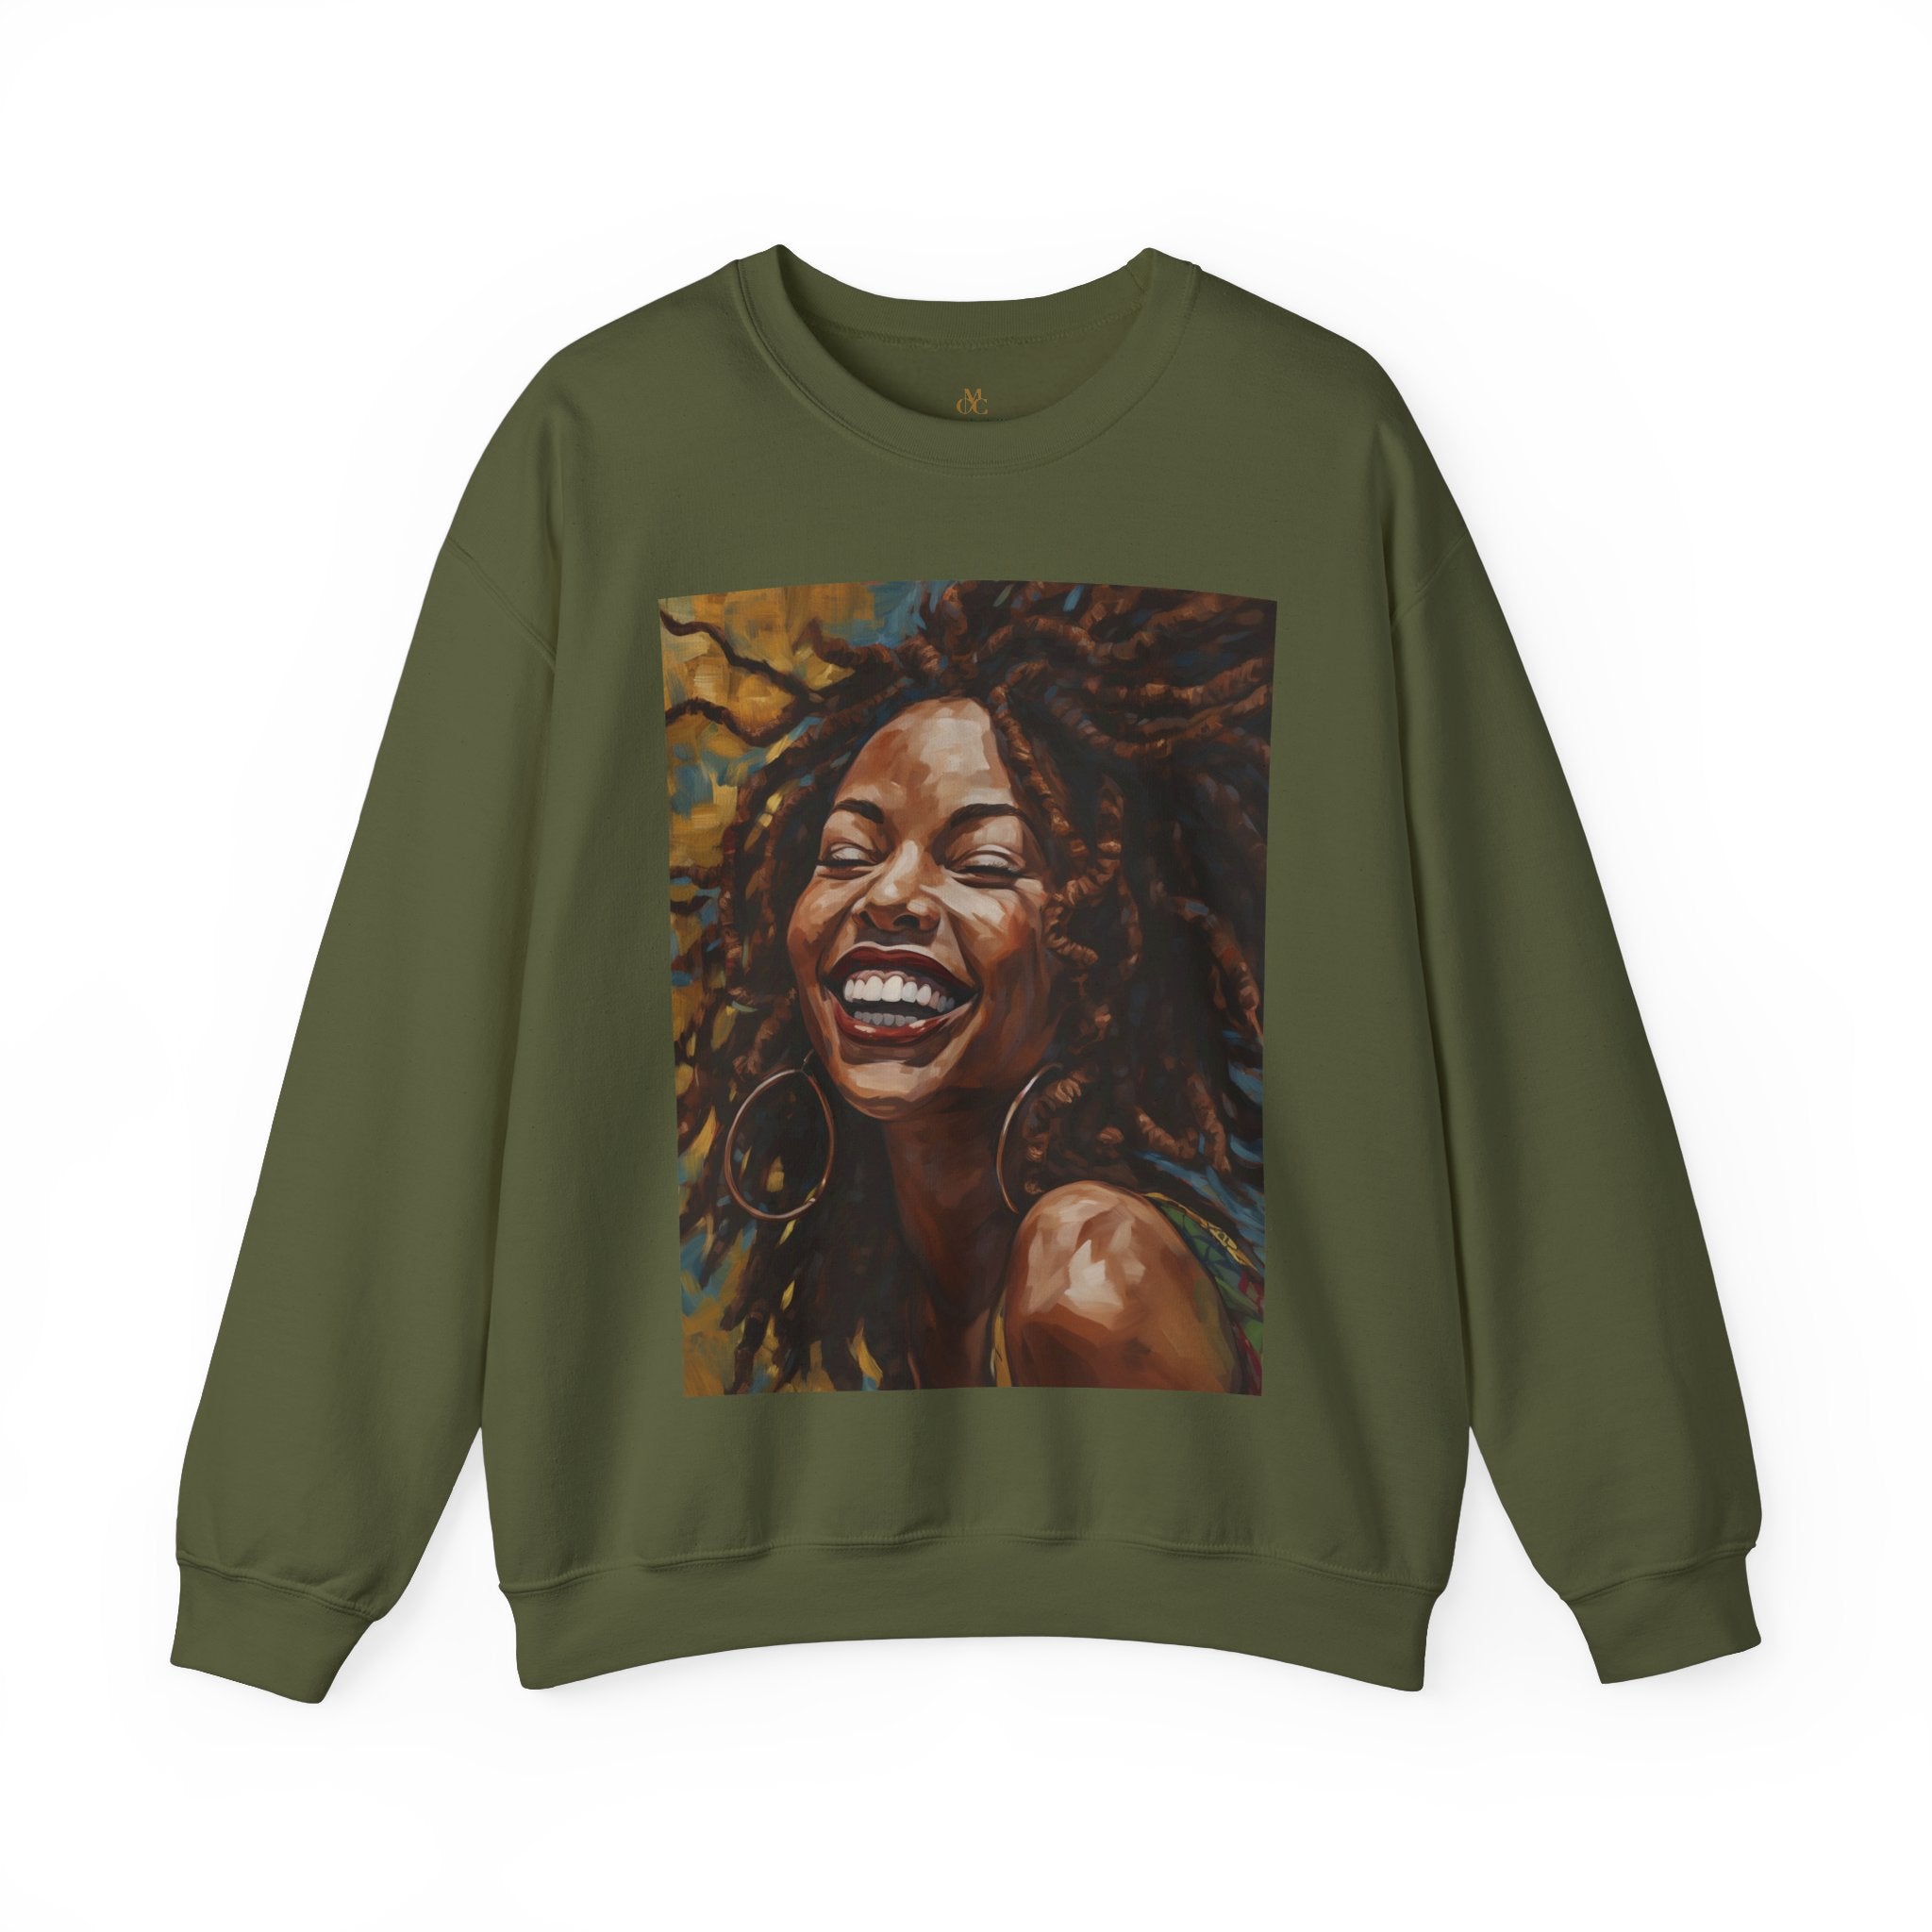 Afro Locs Girl sweatshirt in military green.